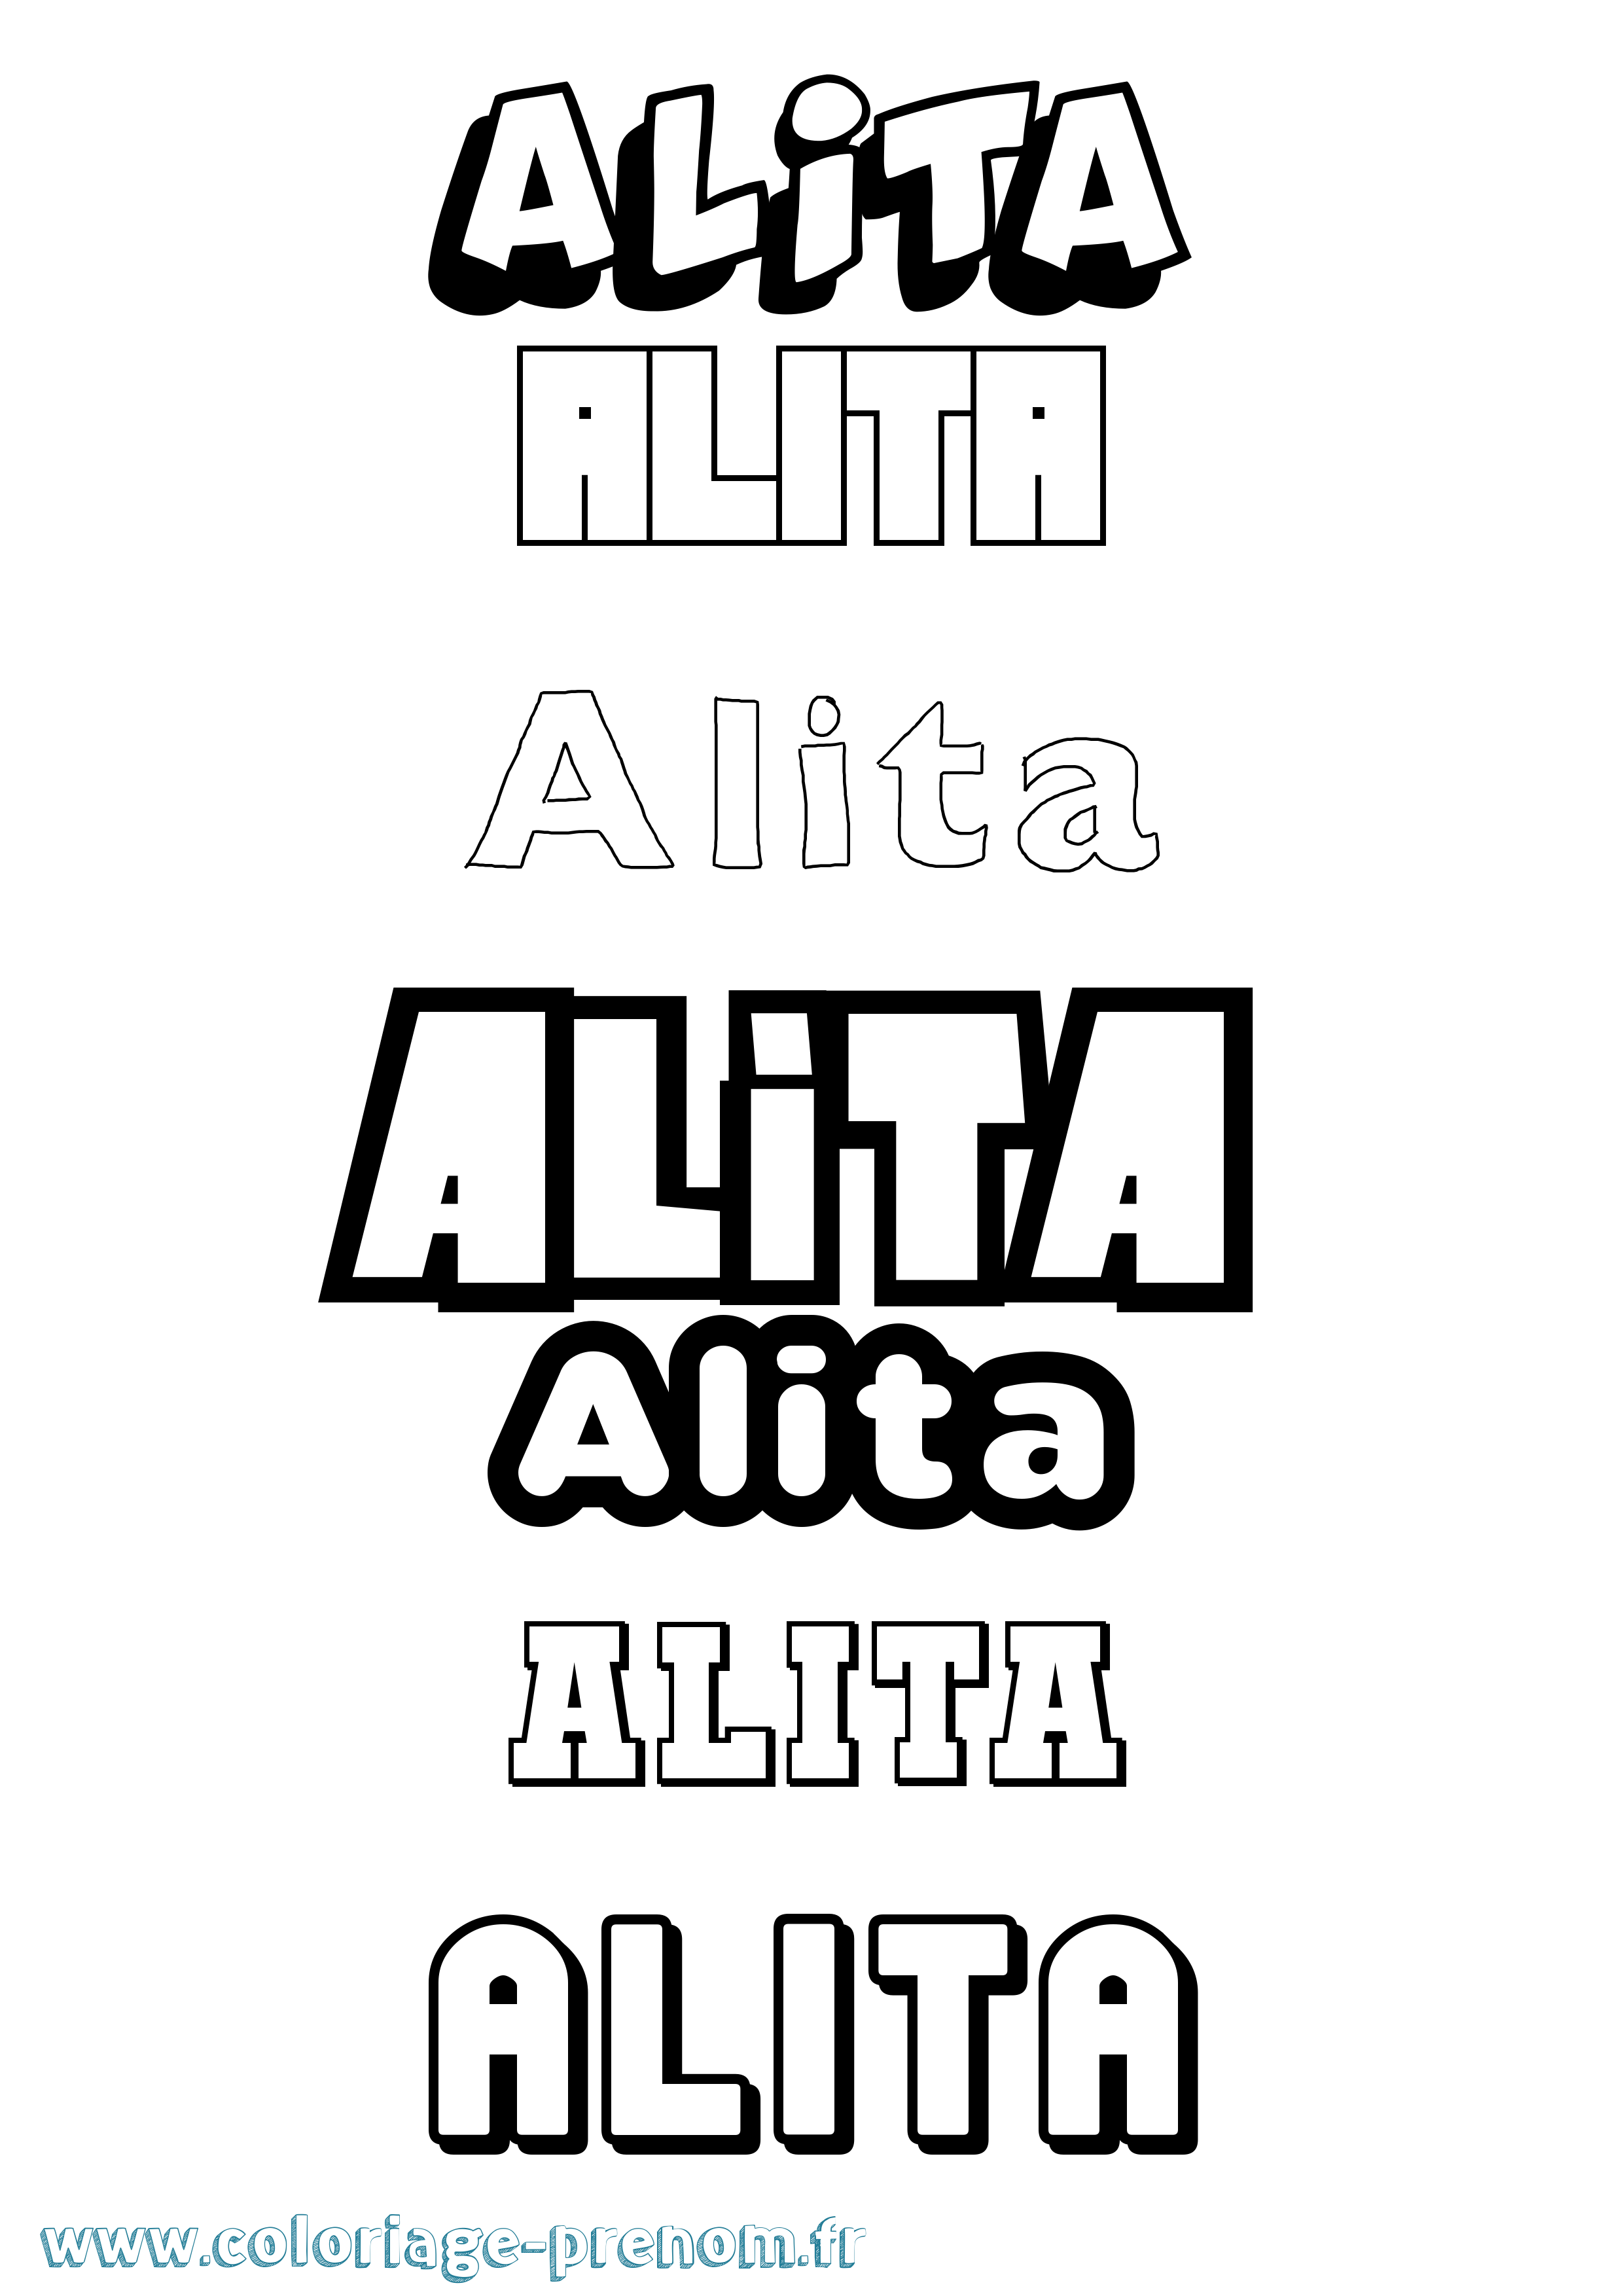 Coloriage prénom Alita Simple